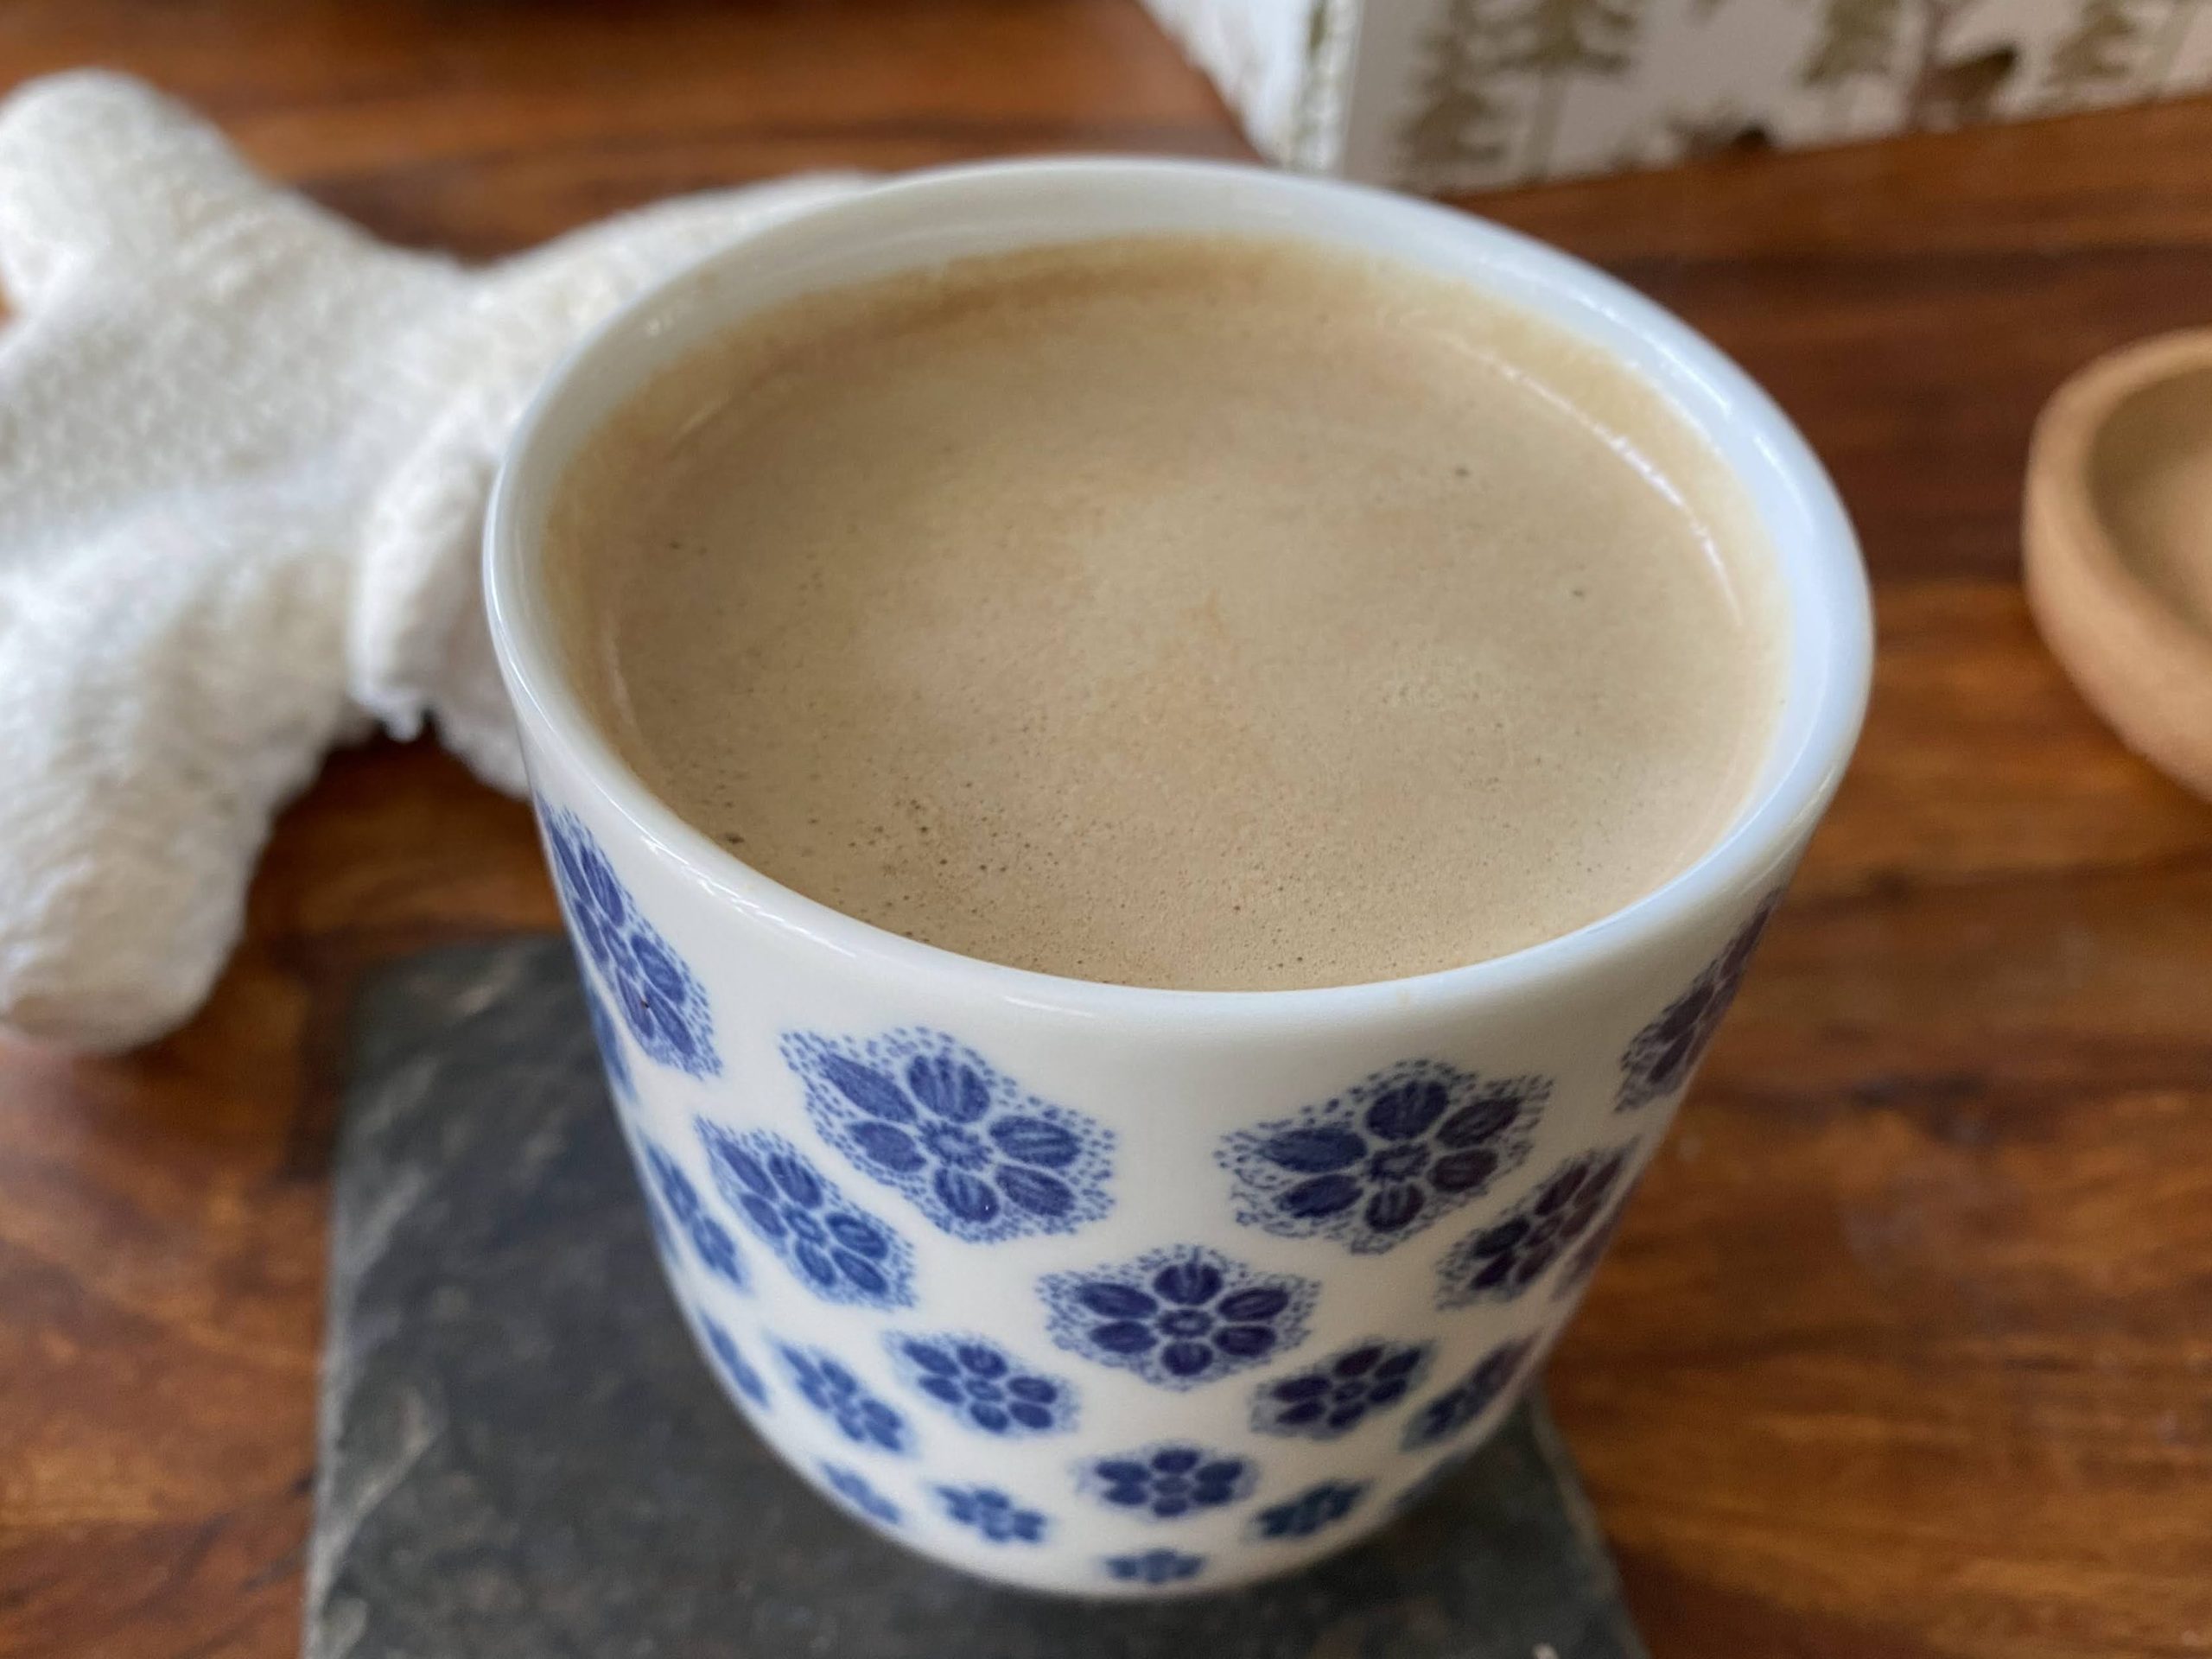 Oatmilk latte in a china Ikea cup